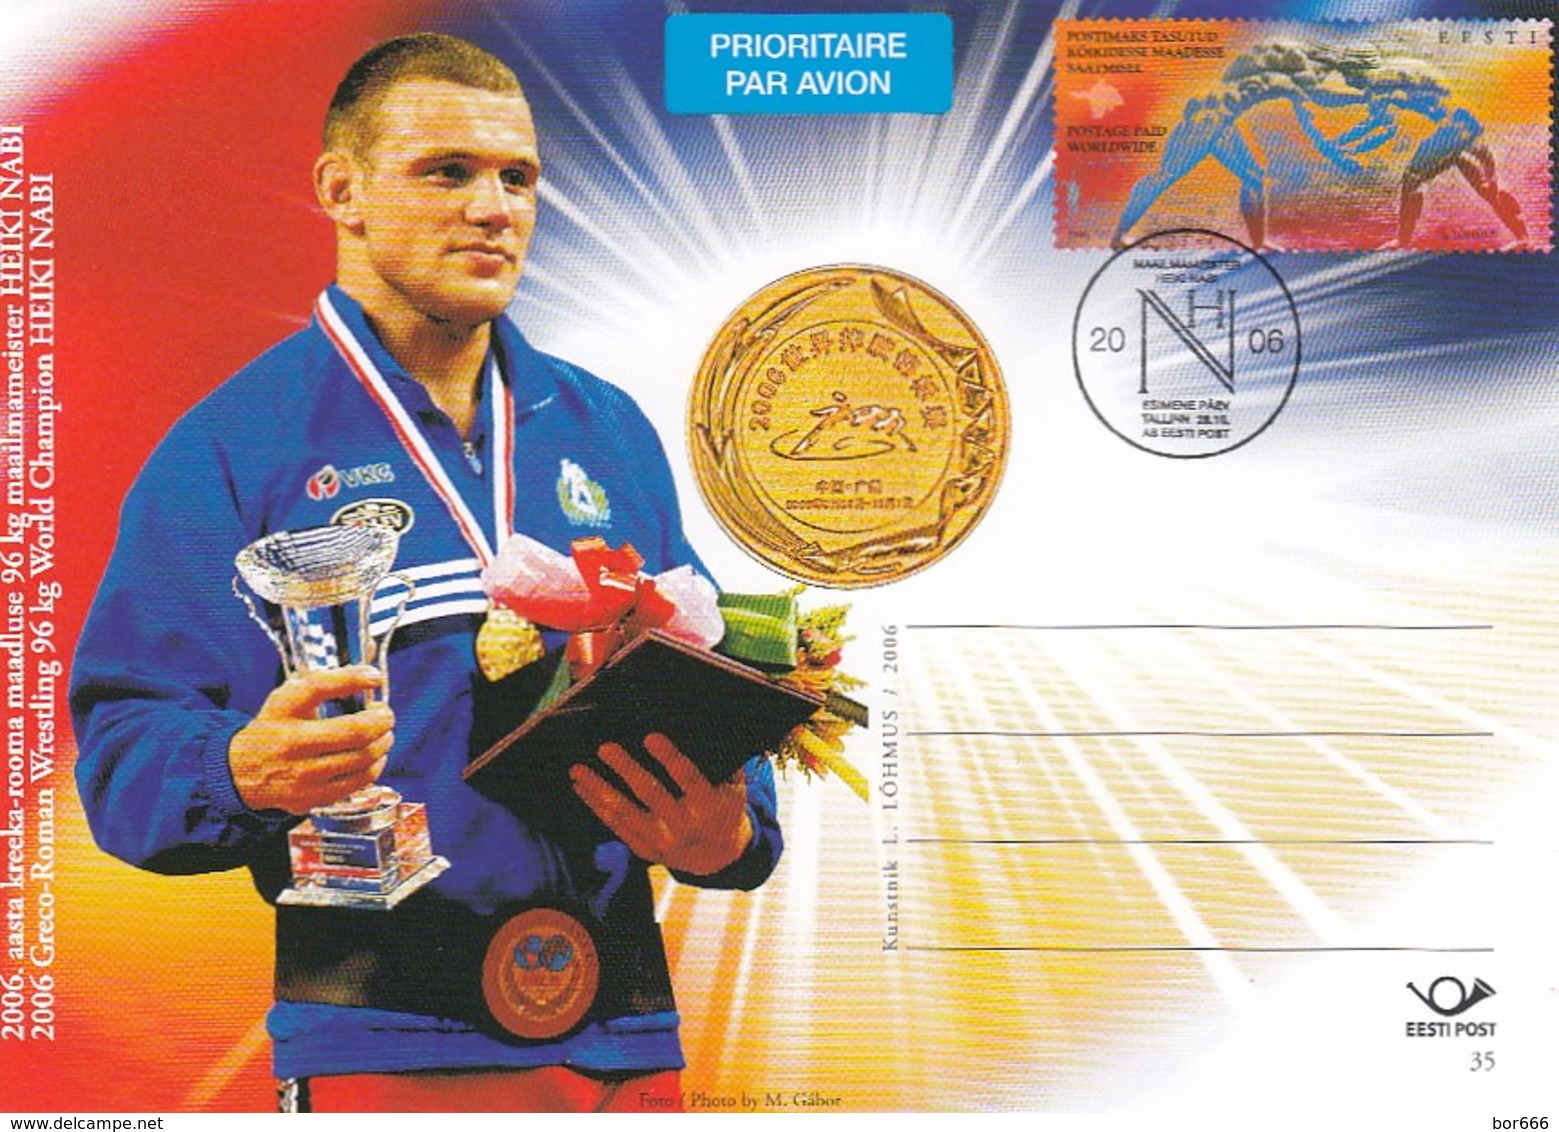 GOOD ESTONIA Postal Stationery 2006 - Wrestler Heiki Nabi - Estonia